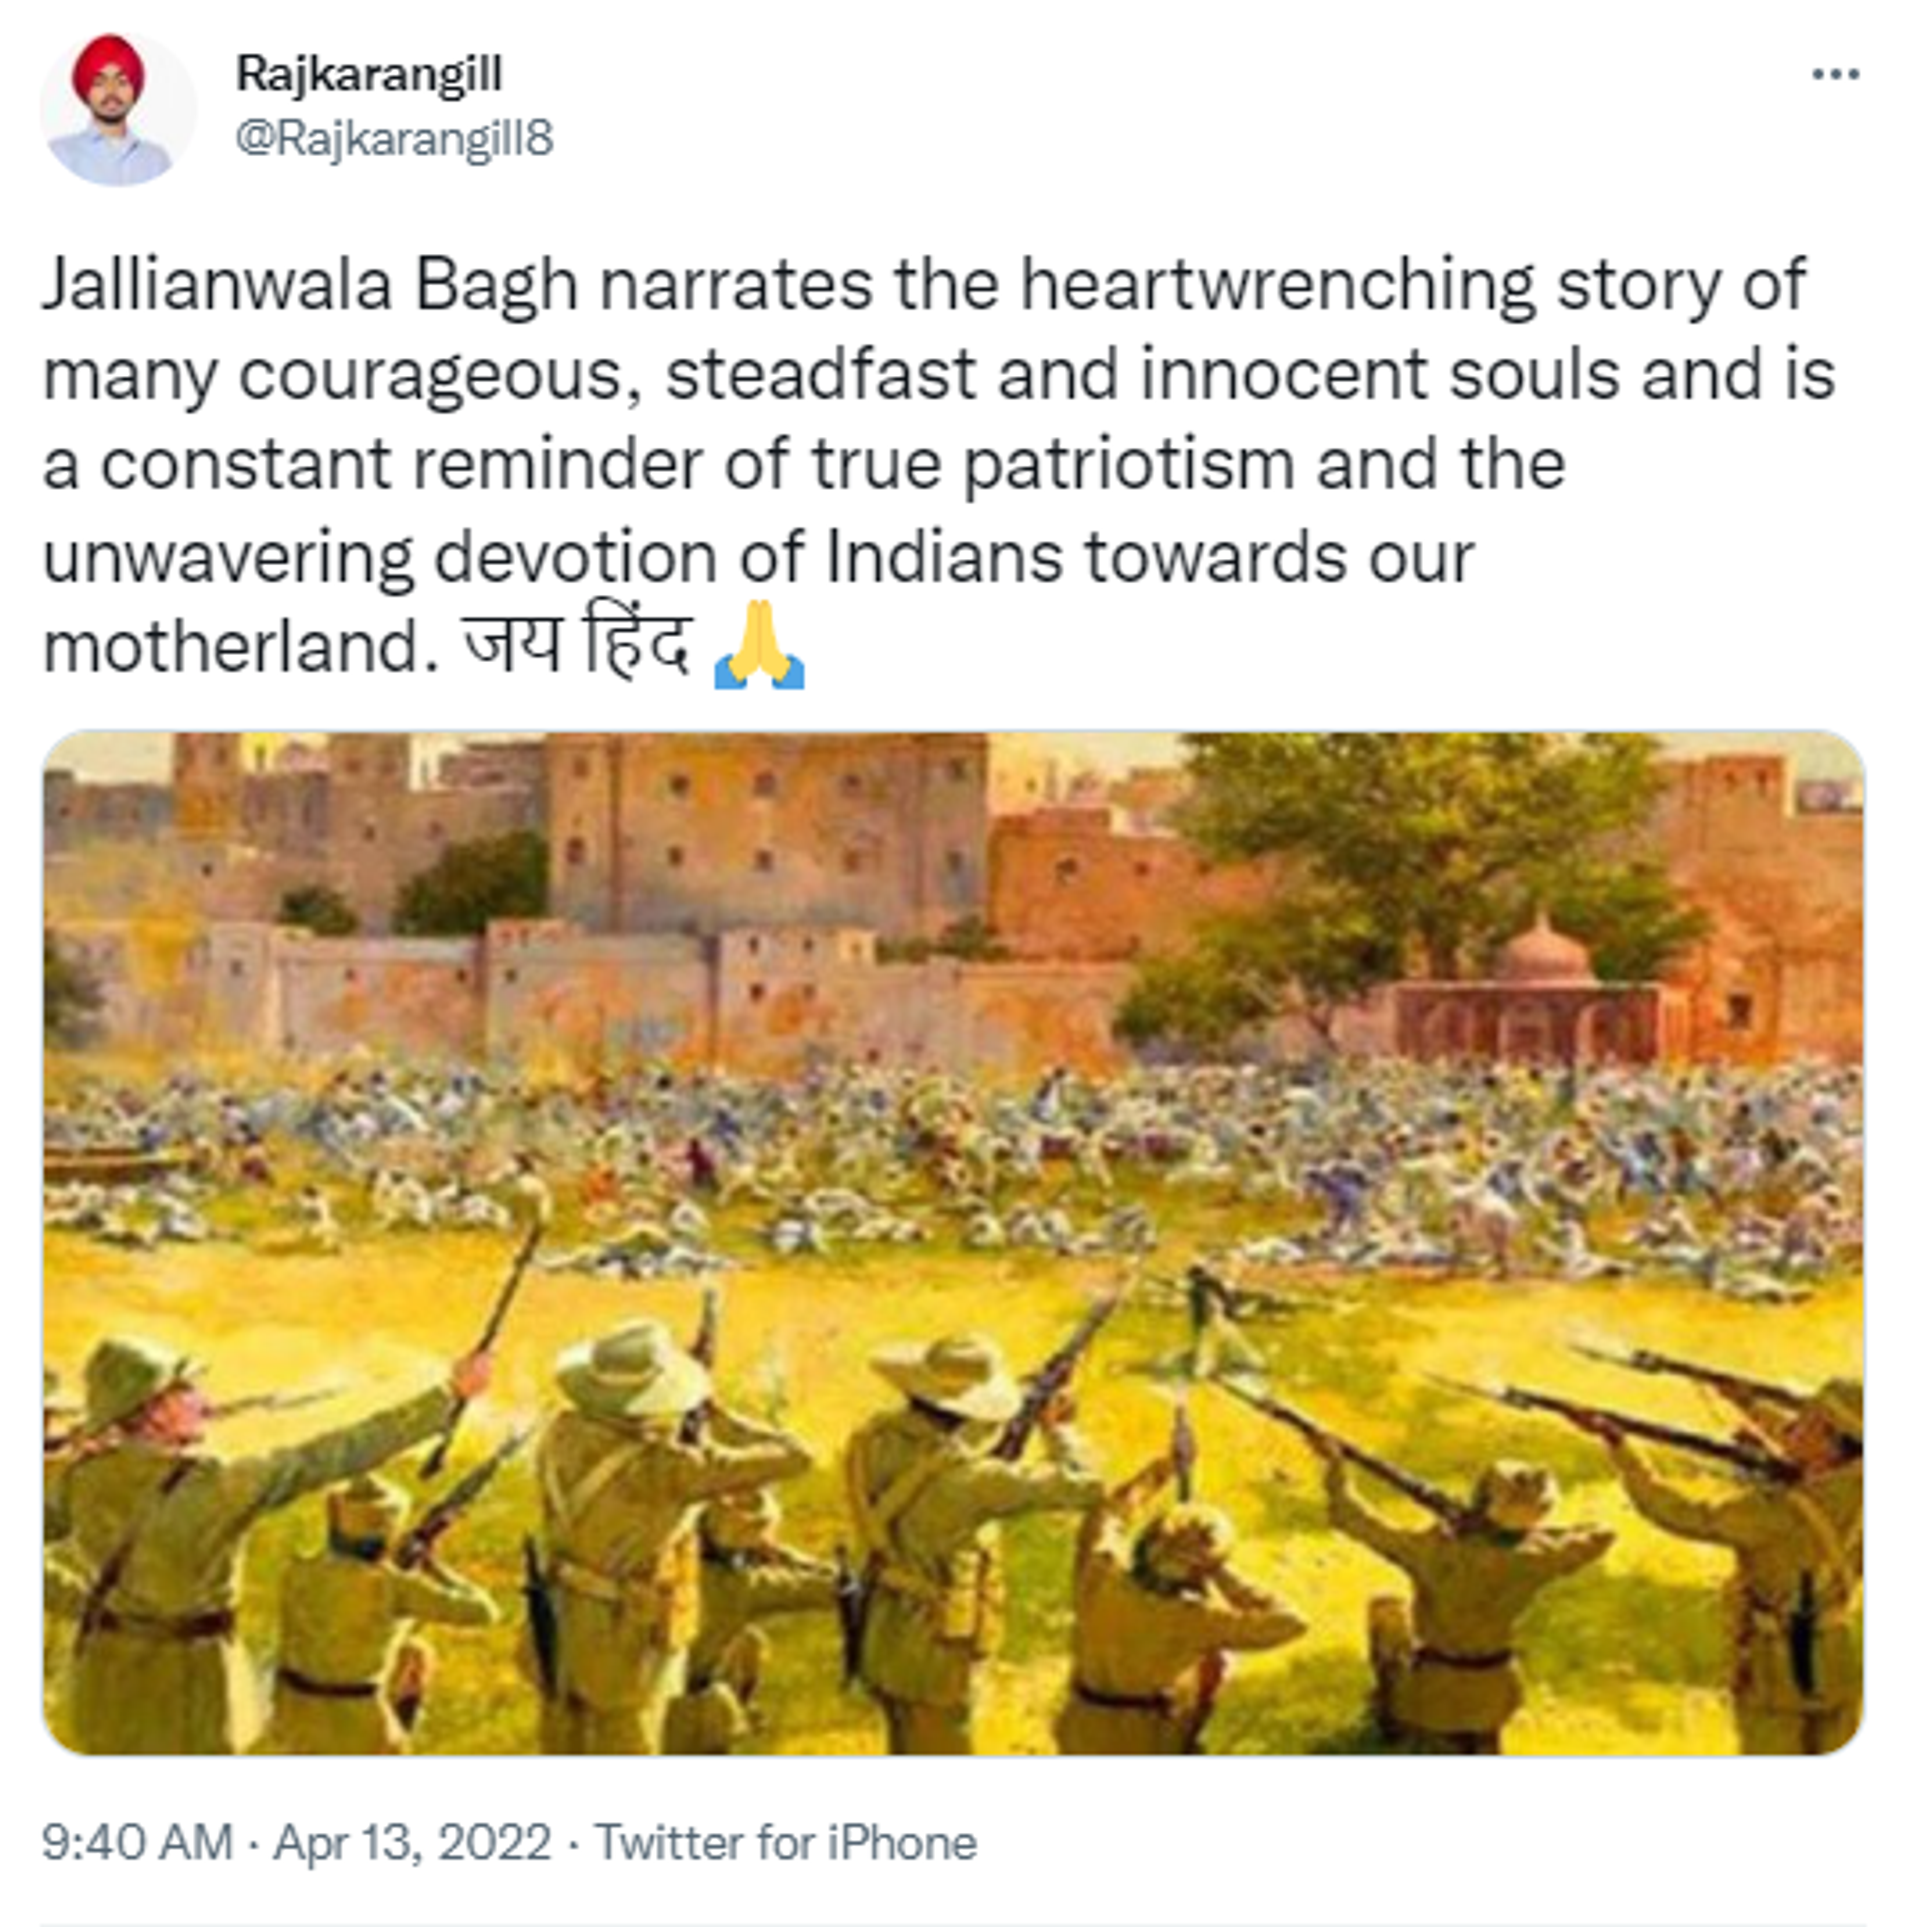 Twitter user pays tribute to the Jallianwala Bagh Massacre - Sputnik International, 1920, 13.04.2022